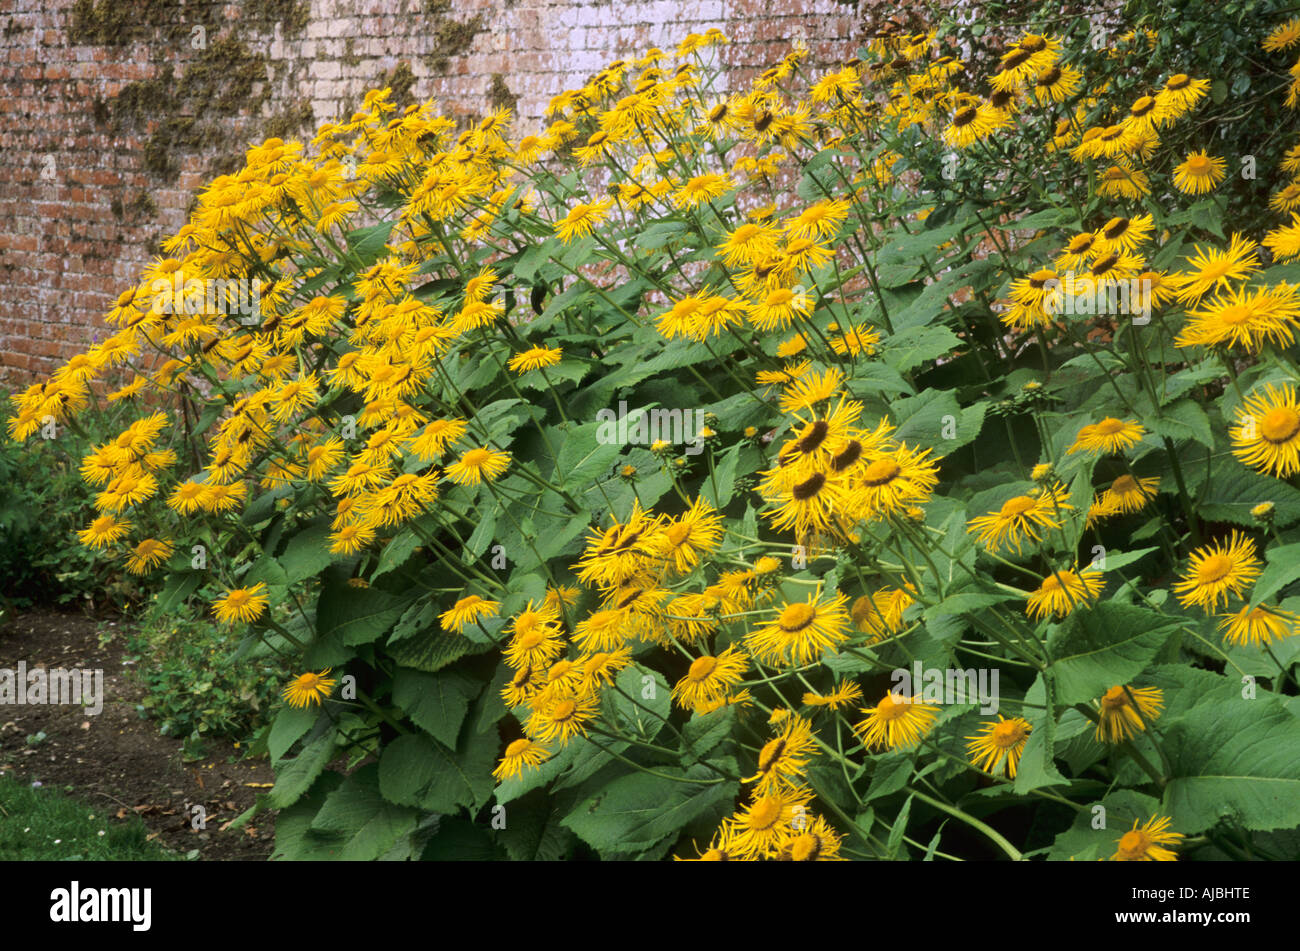 Inula magnifica, brick wall, yellow daisy like flowers, garden plant inulas Stock Photo